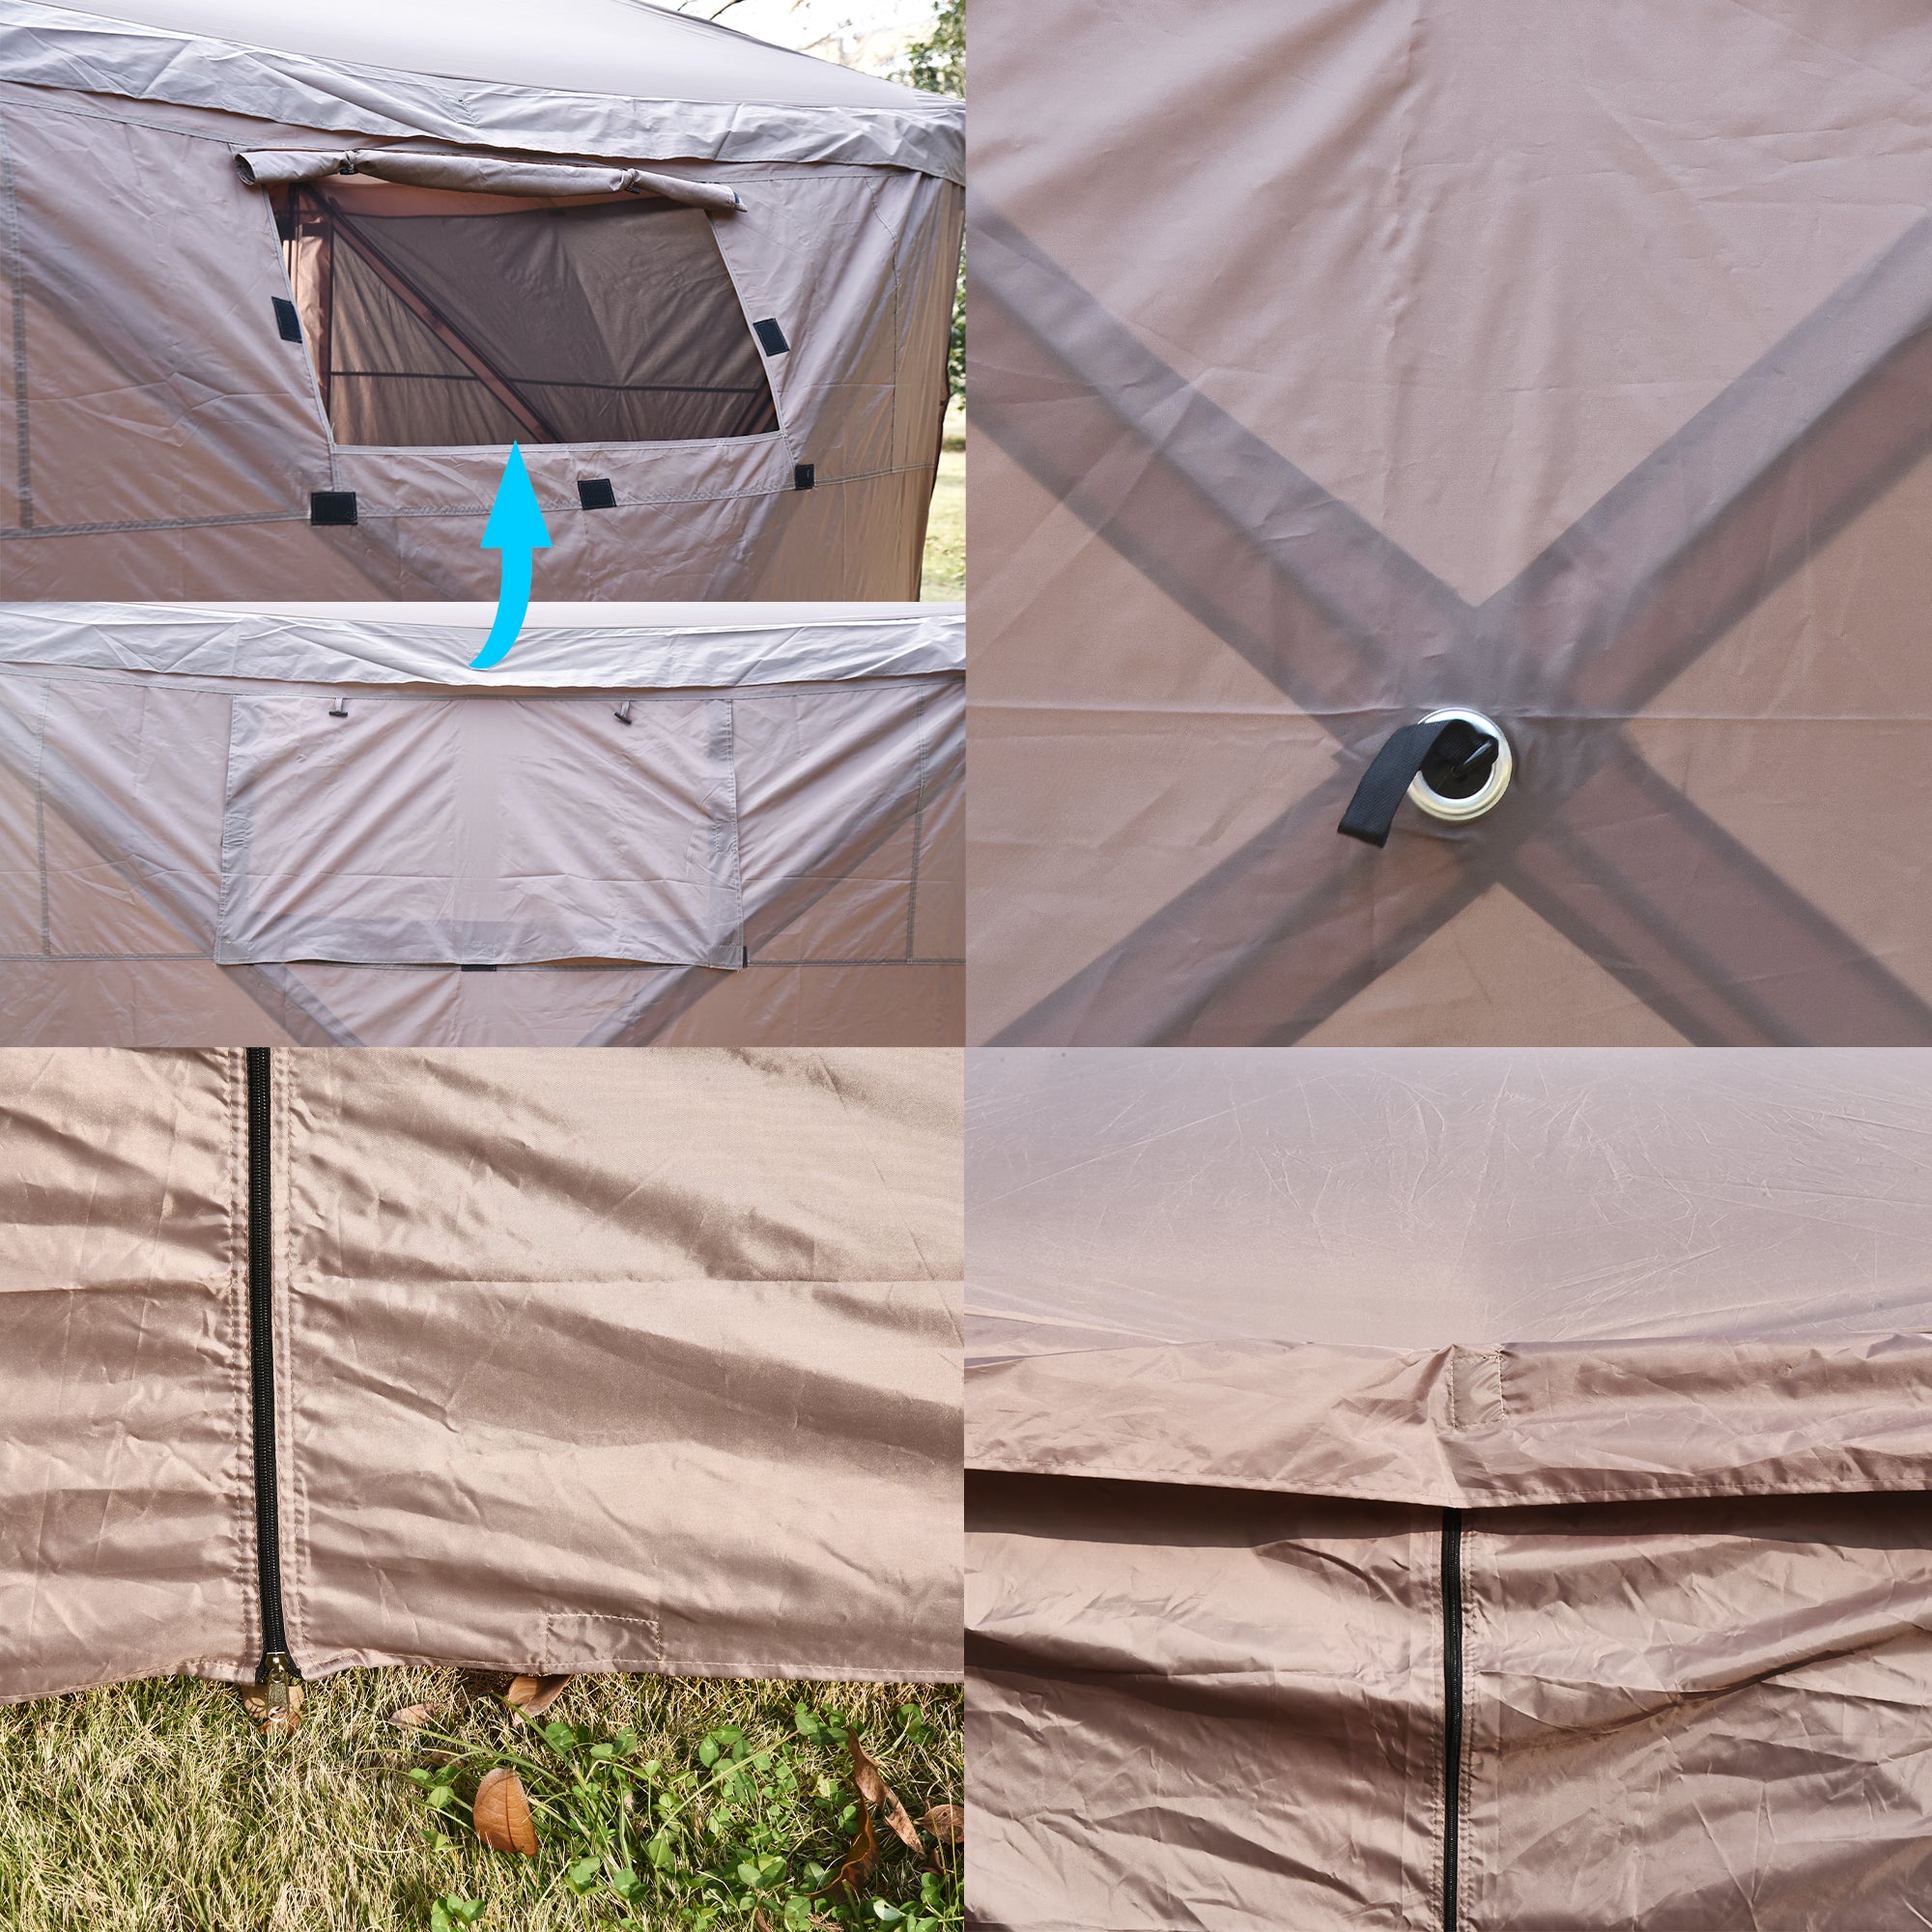 Mcombo Gazebo Tent Pop Up Portable Wheel Durable Screen Tent (3-5 Persons) 6052-C1024